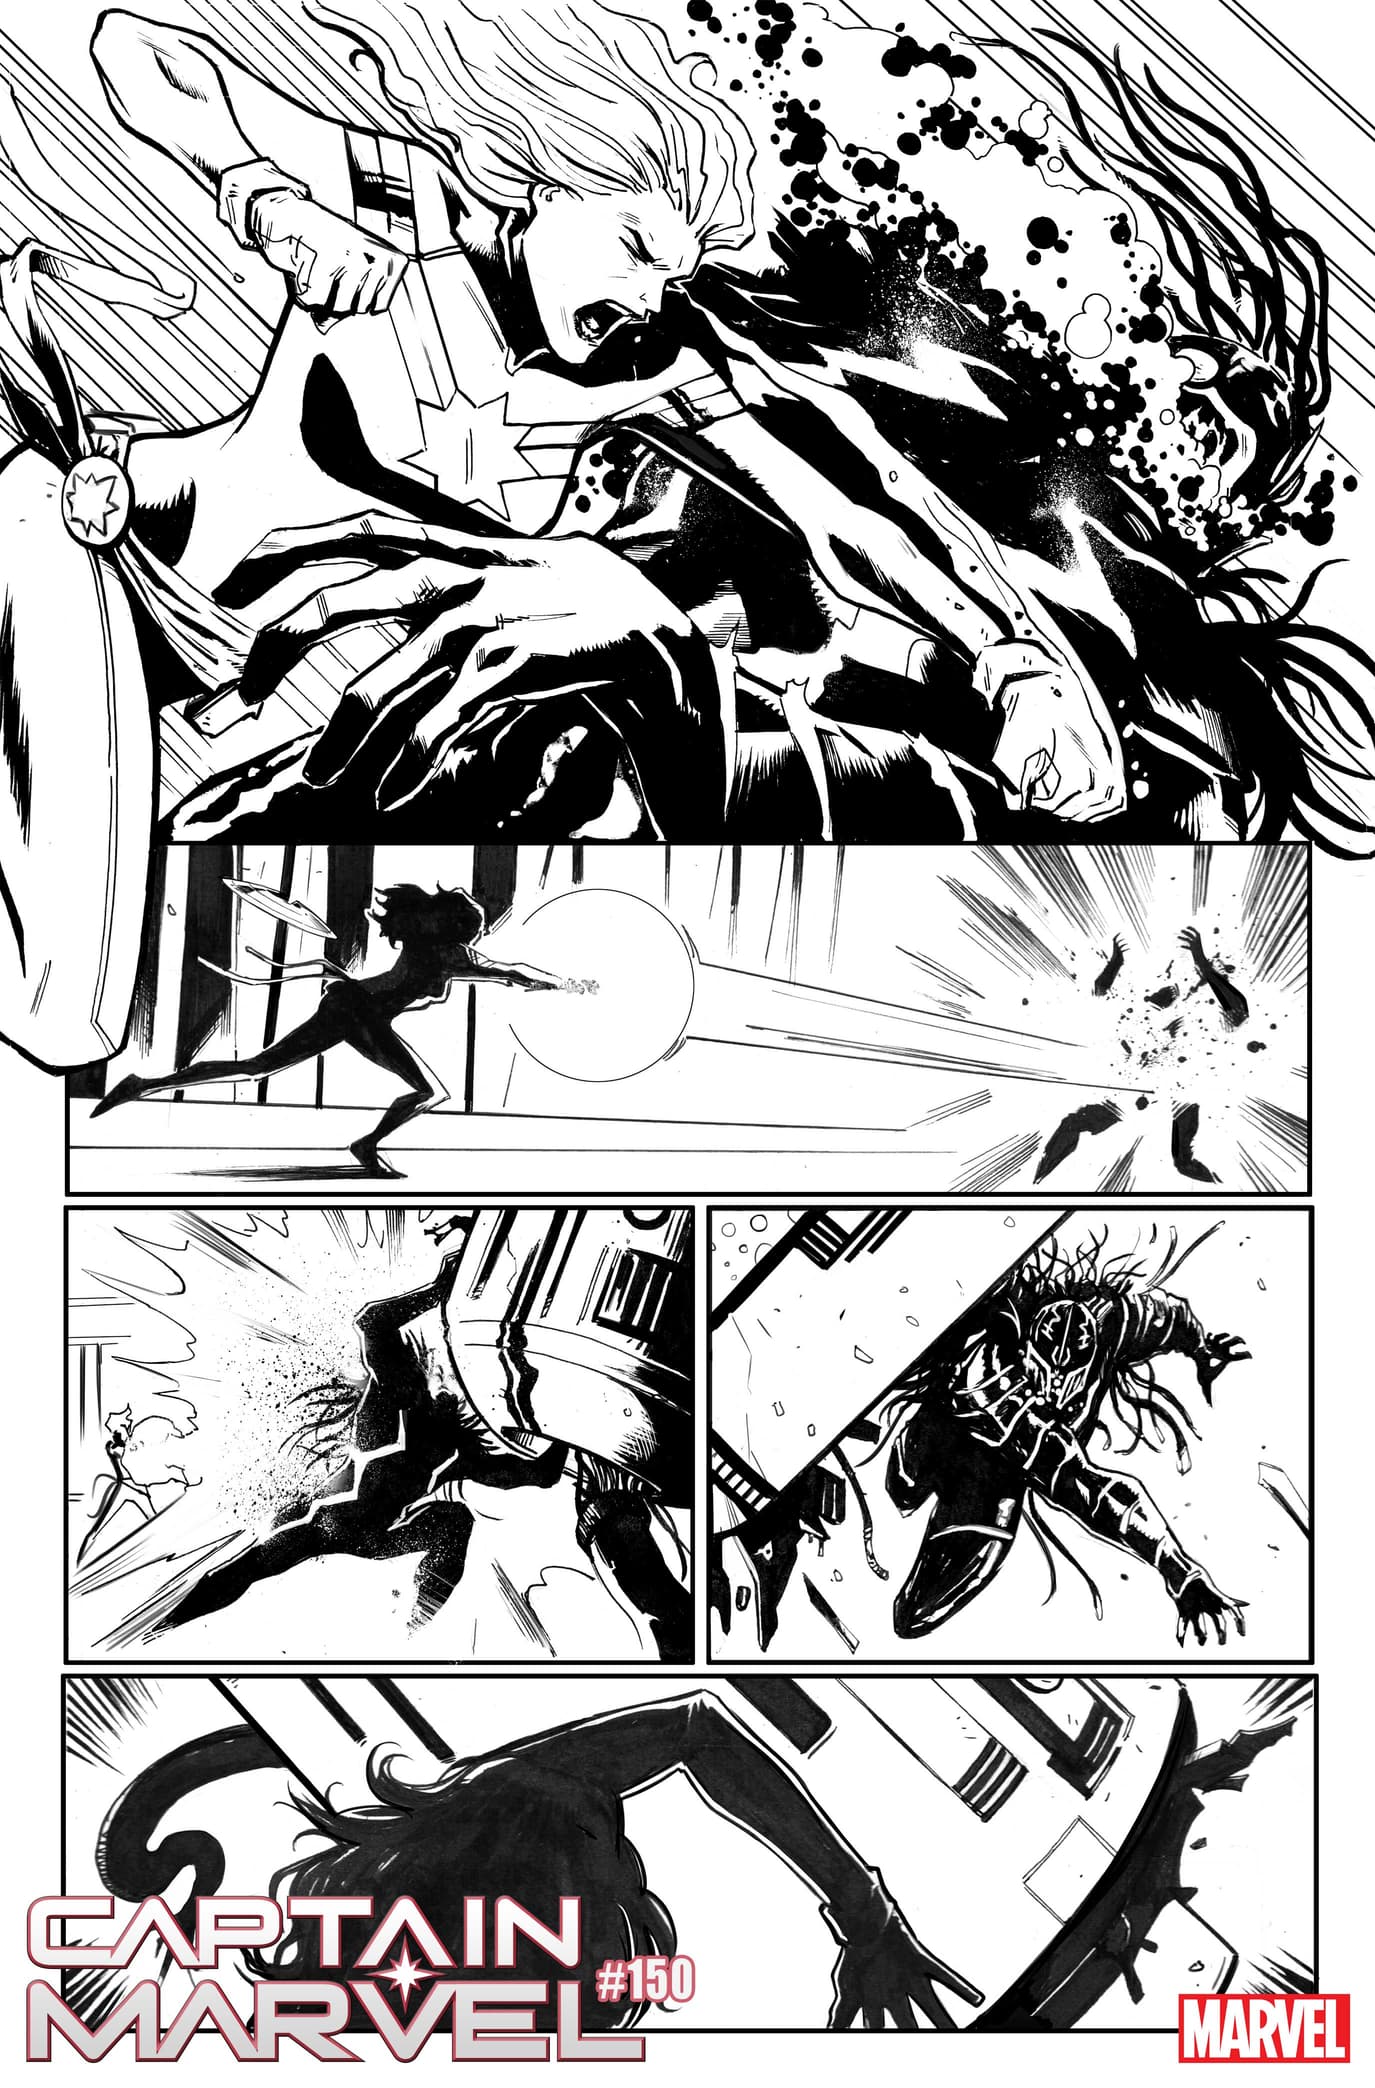 Captain Marvel #16 preview art